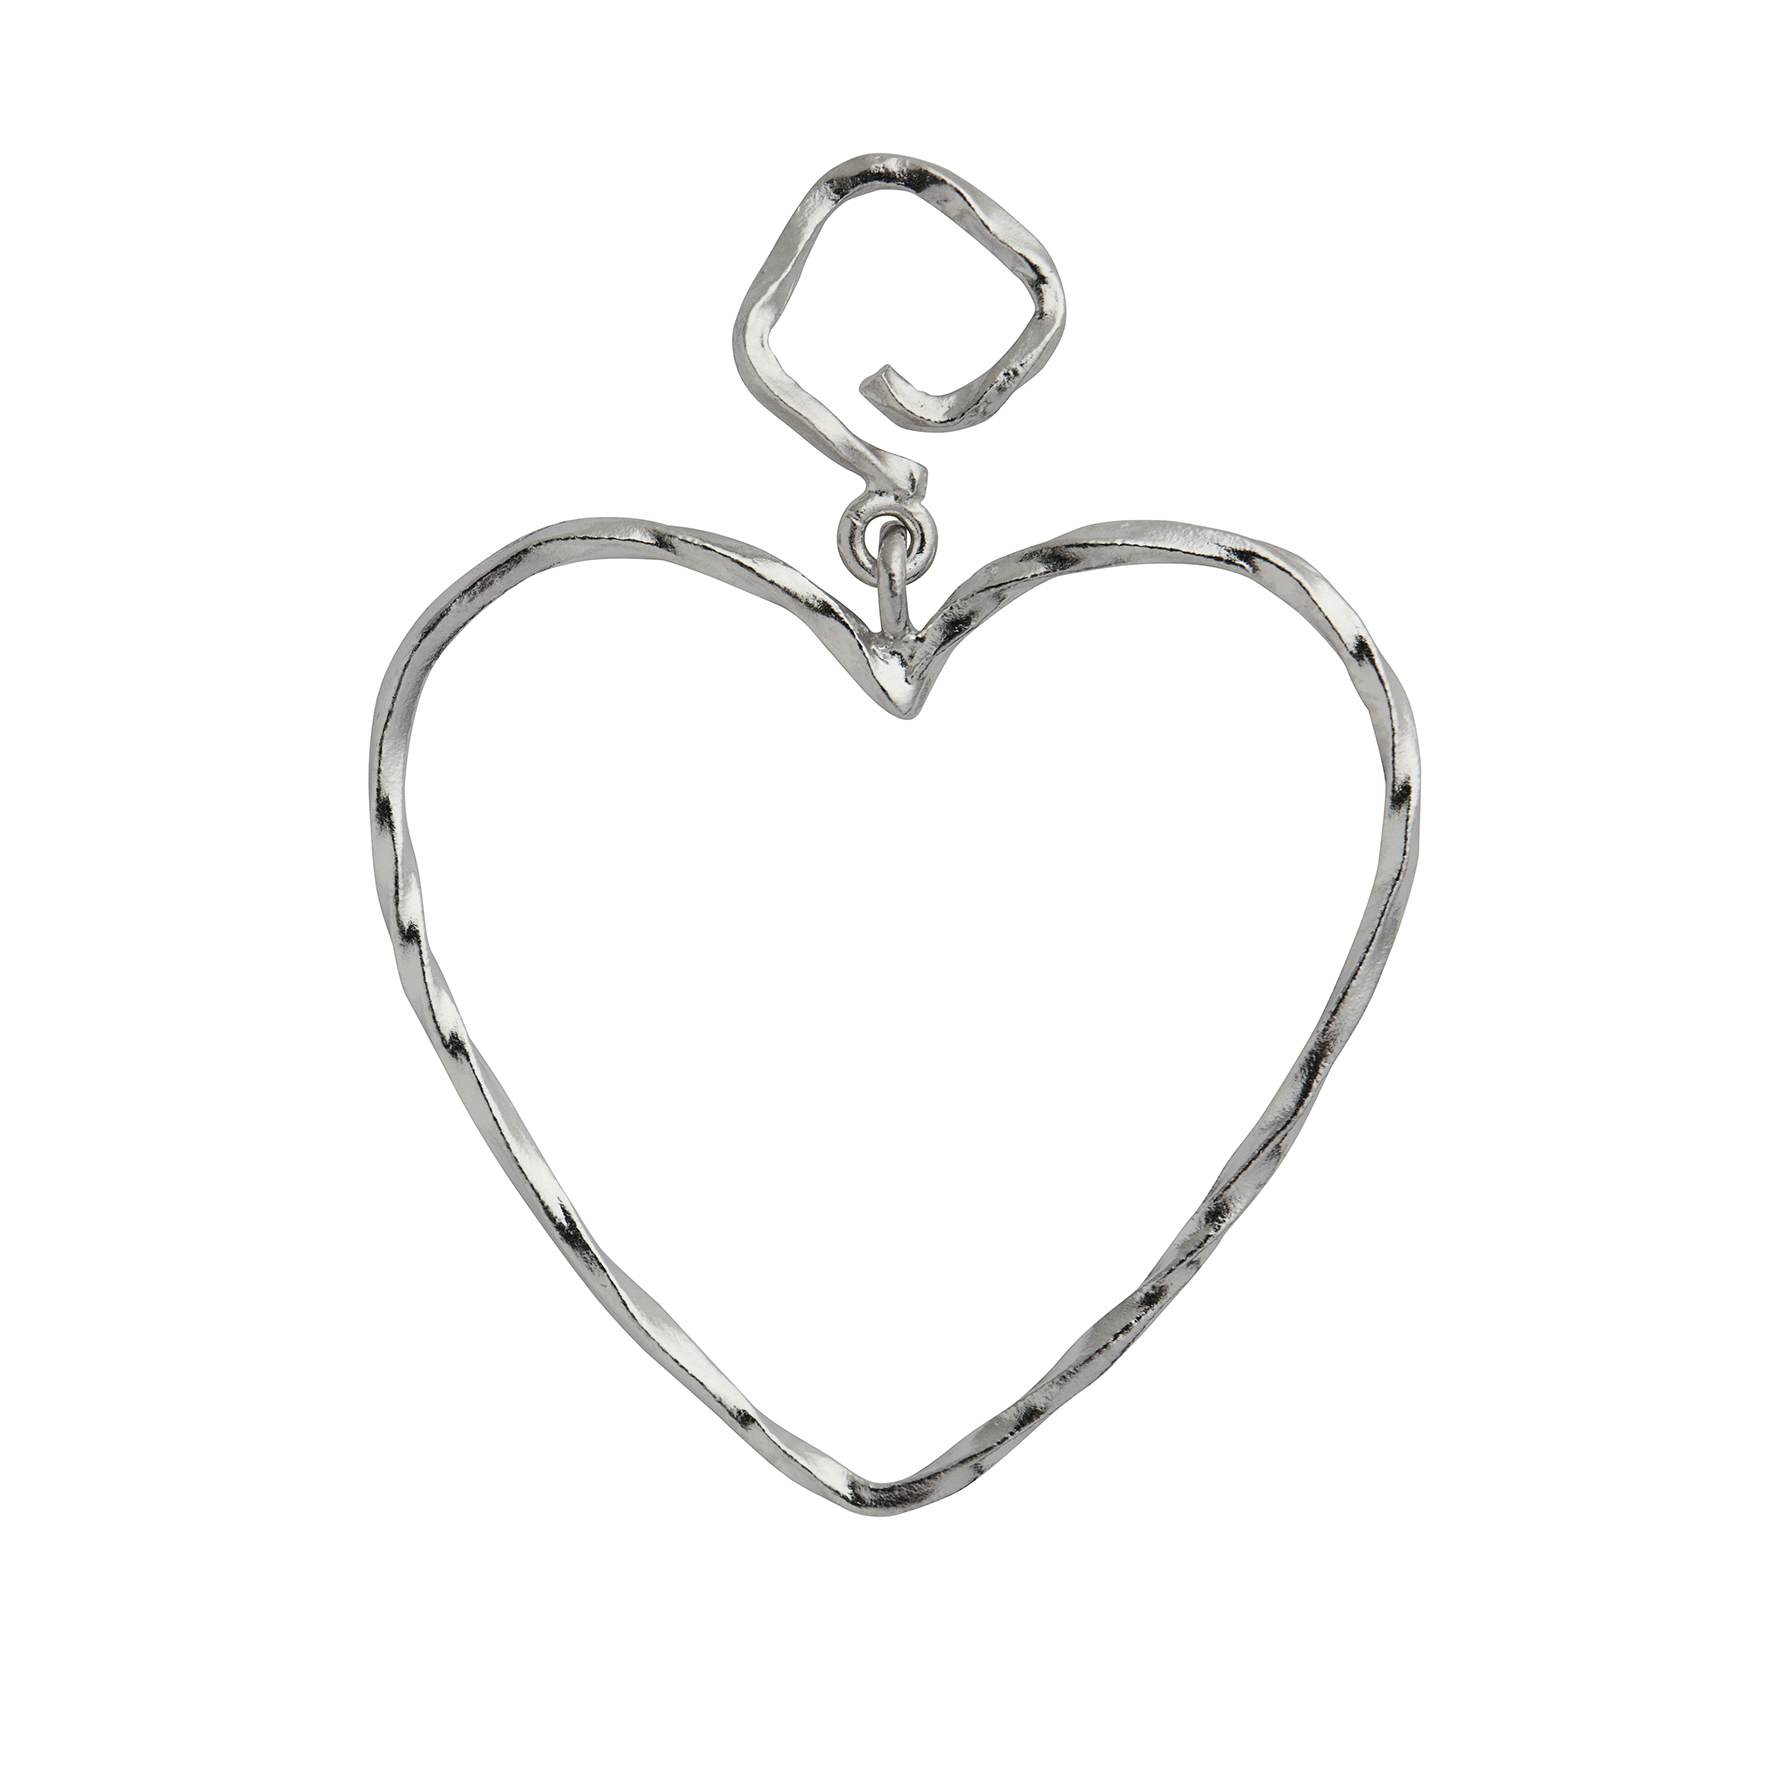 Funky Heart Earring from STINE A Jewelry in Silver Sterling 925